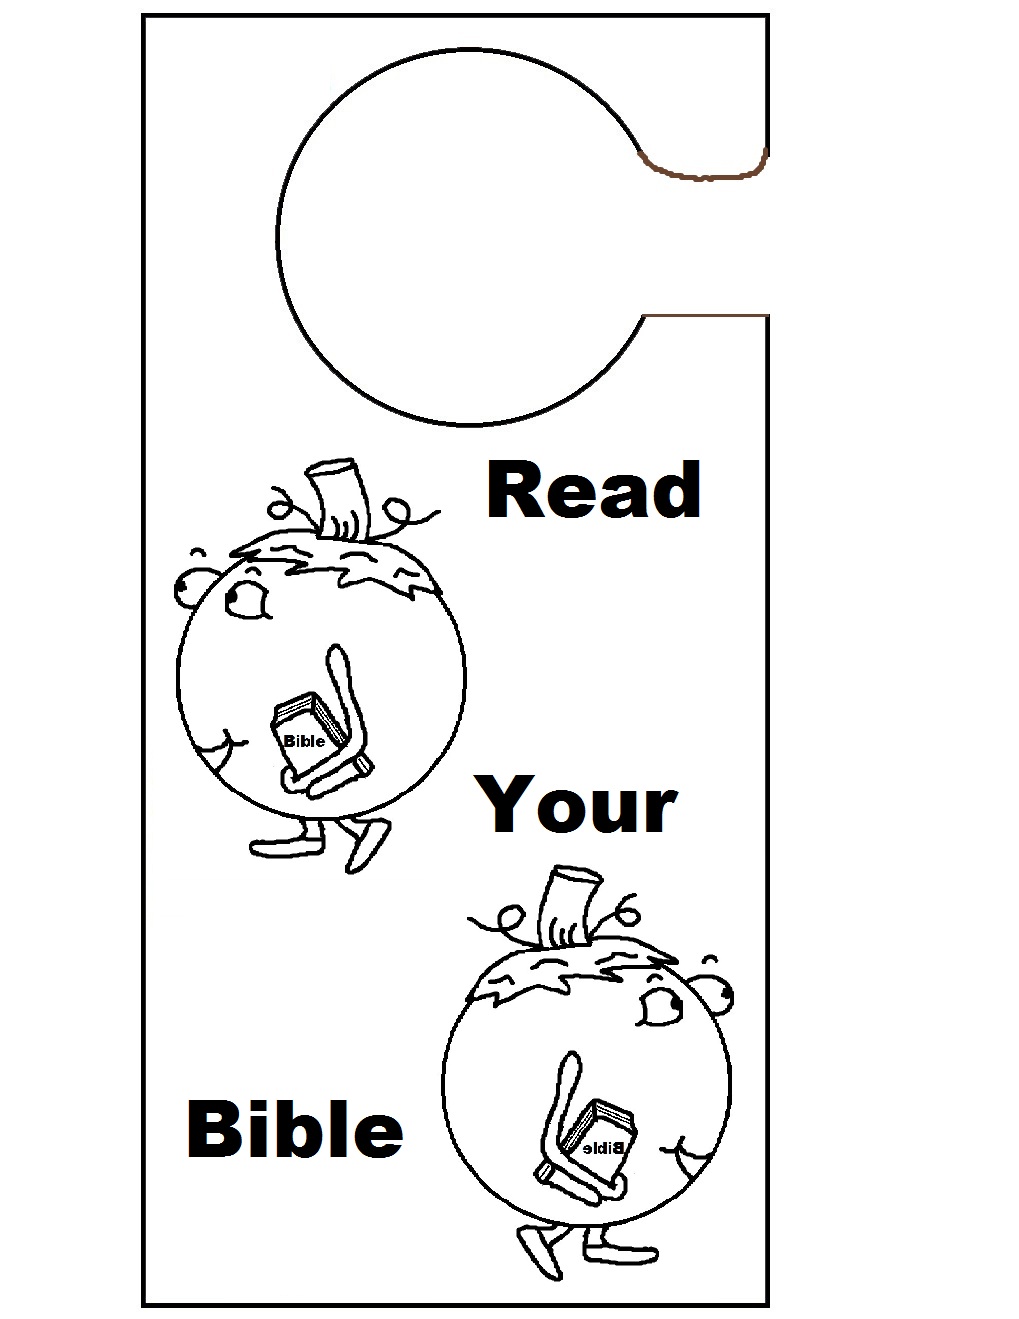 pumpkin doorknob hangers rh sundayschoolcrafts net read your bible coloring page jesus read the bible coloring page